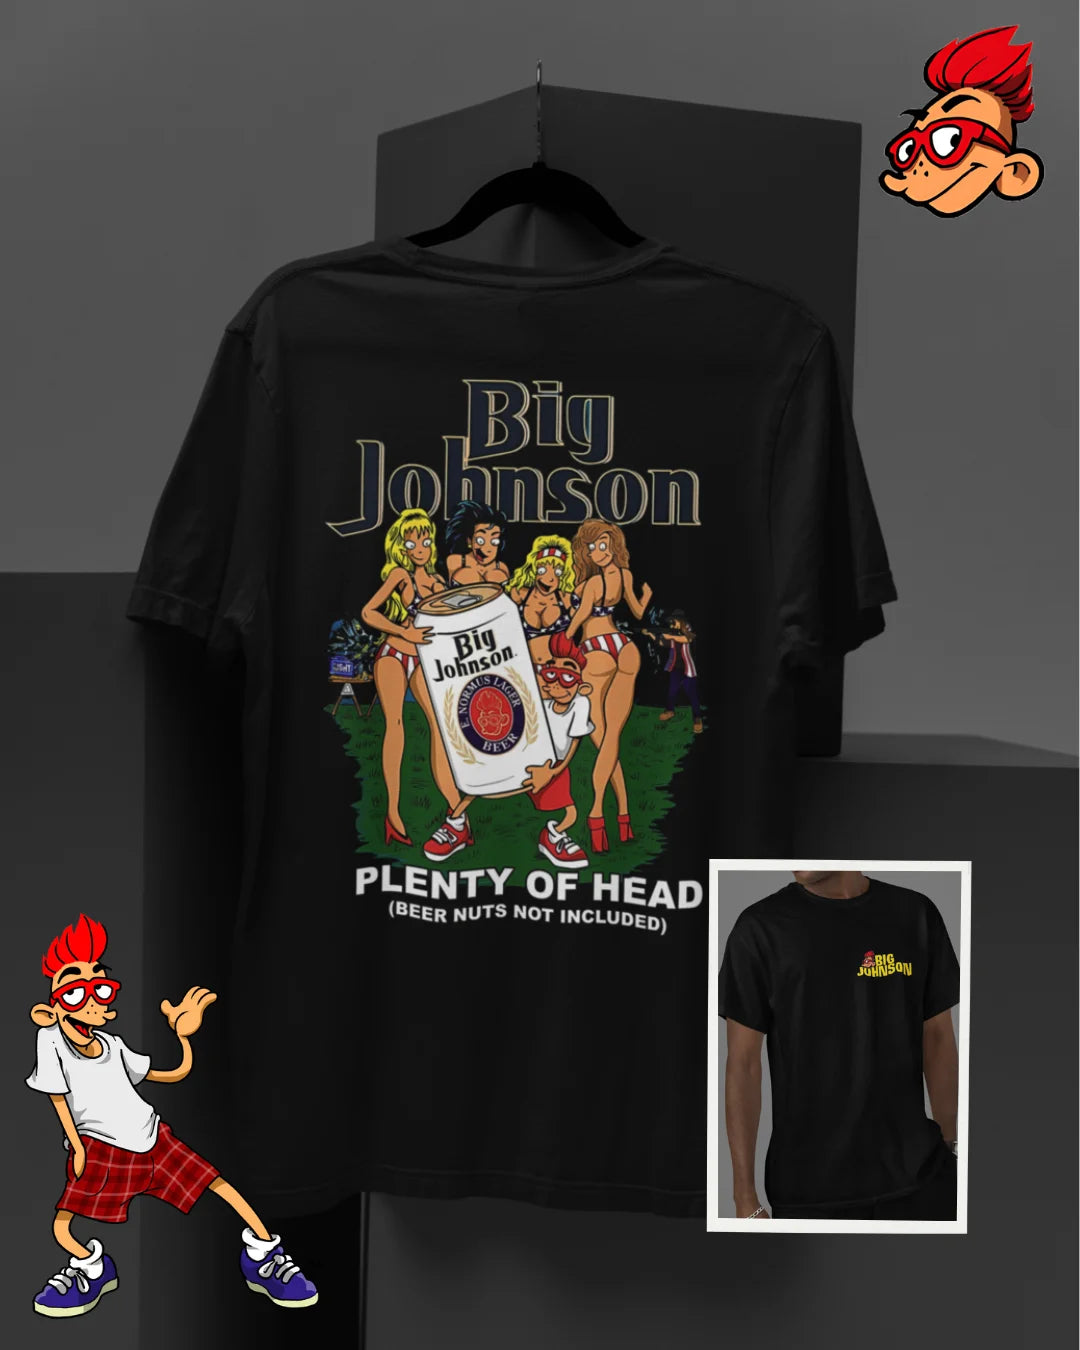 Camiseta Algodão Premium Big Johnson - Plenty of Head